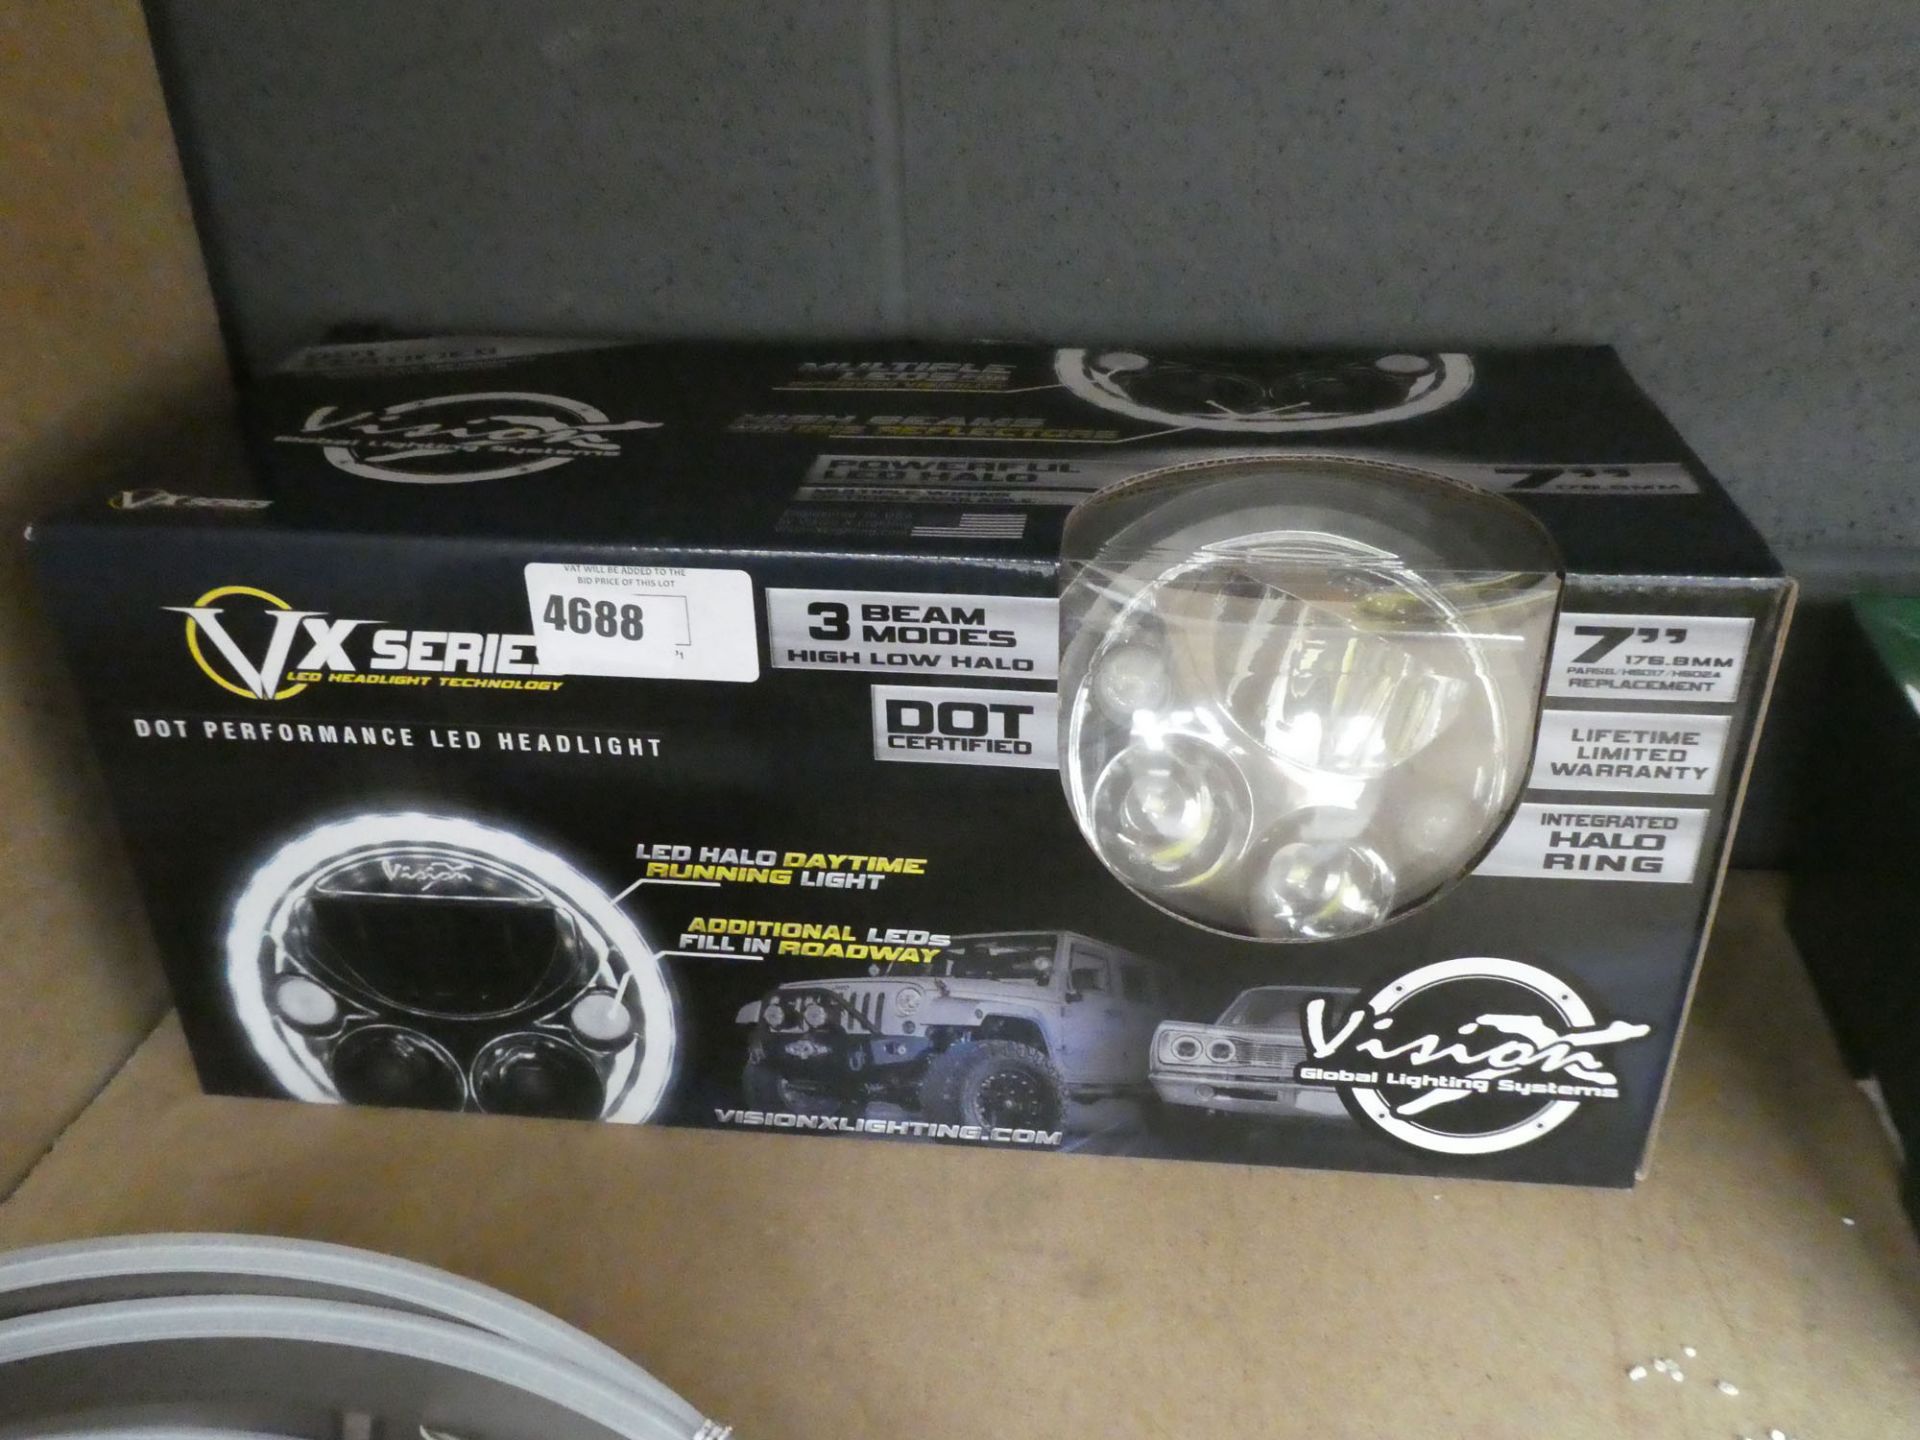 Boxed VX series three beam mode headlamp set